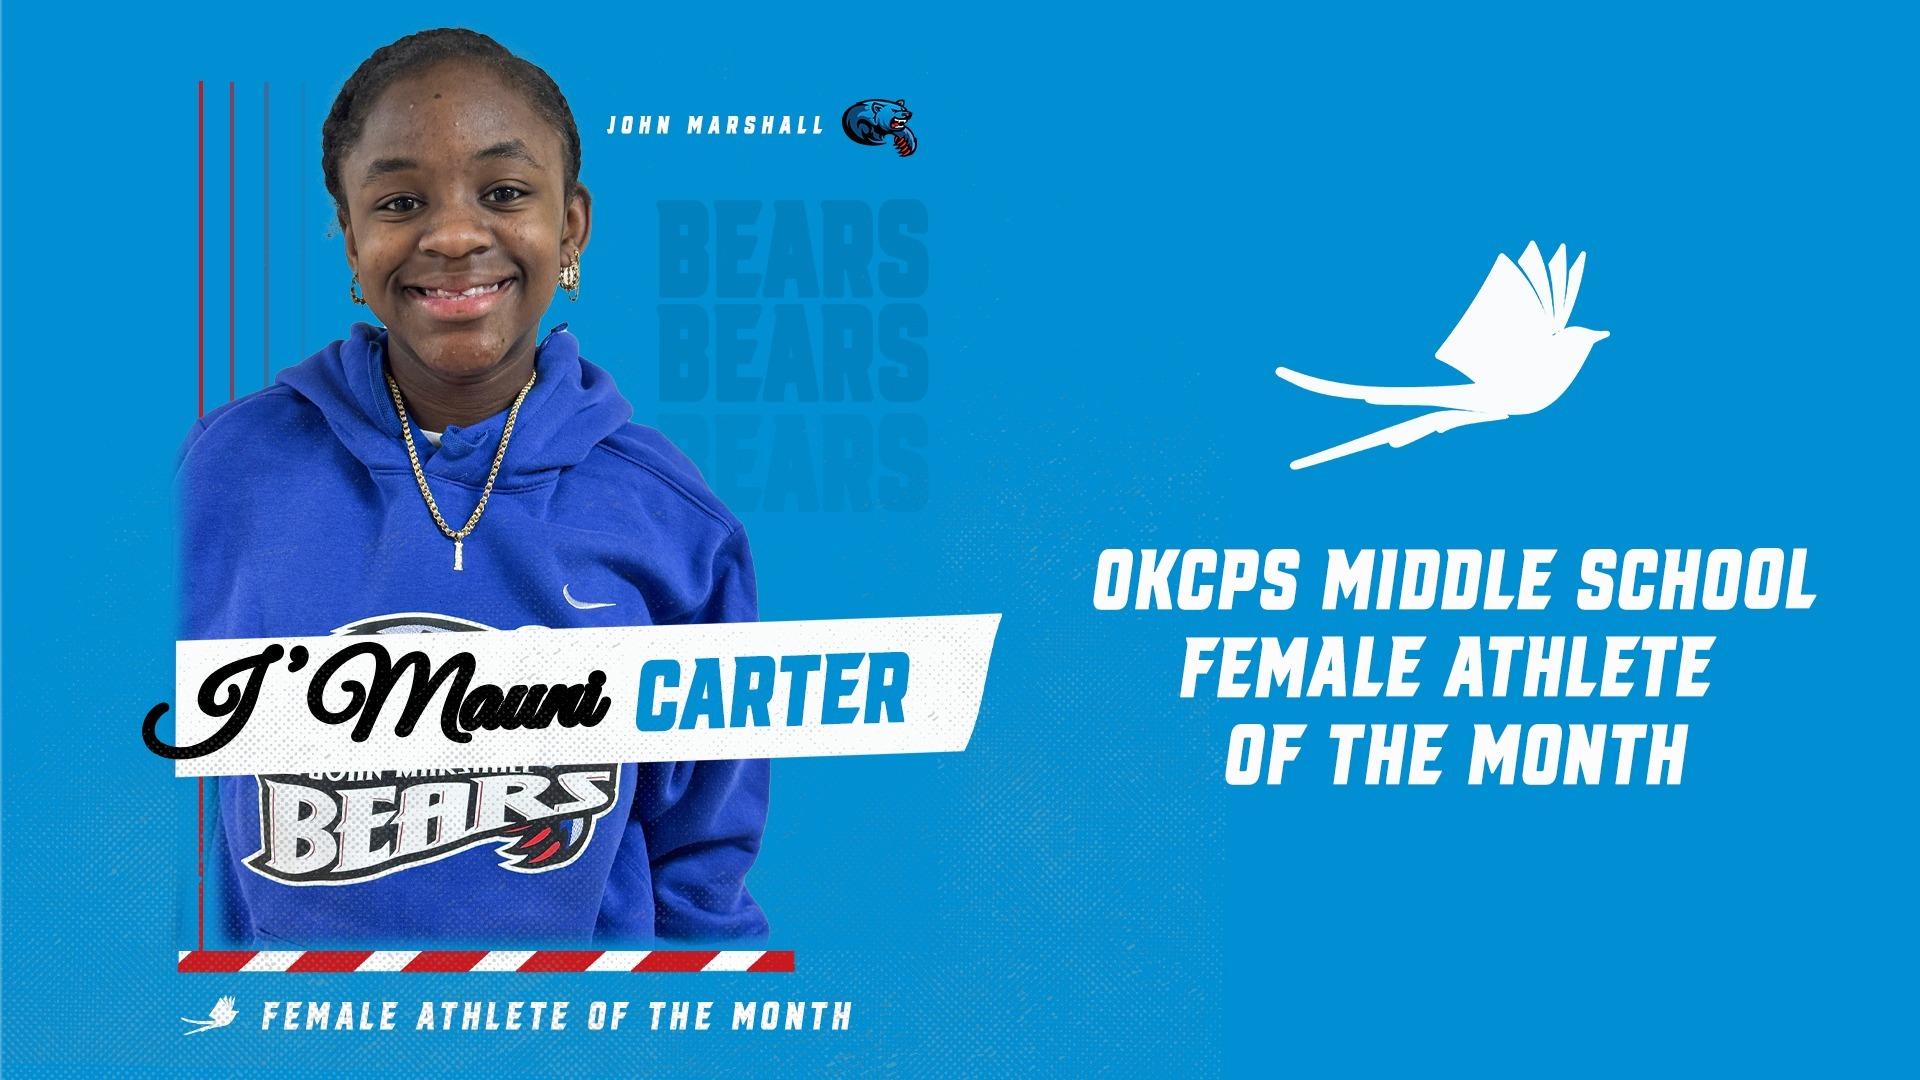 Slide 1 - I'Mauni Carter Named OKCPS Middle School December Athlete of the Month